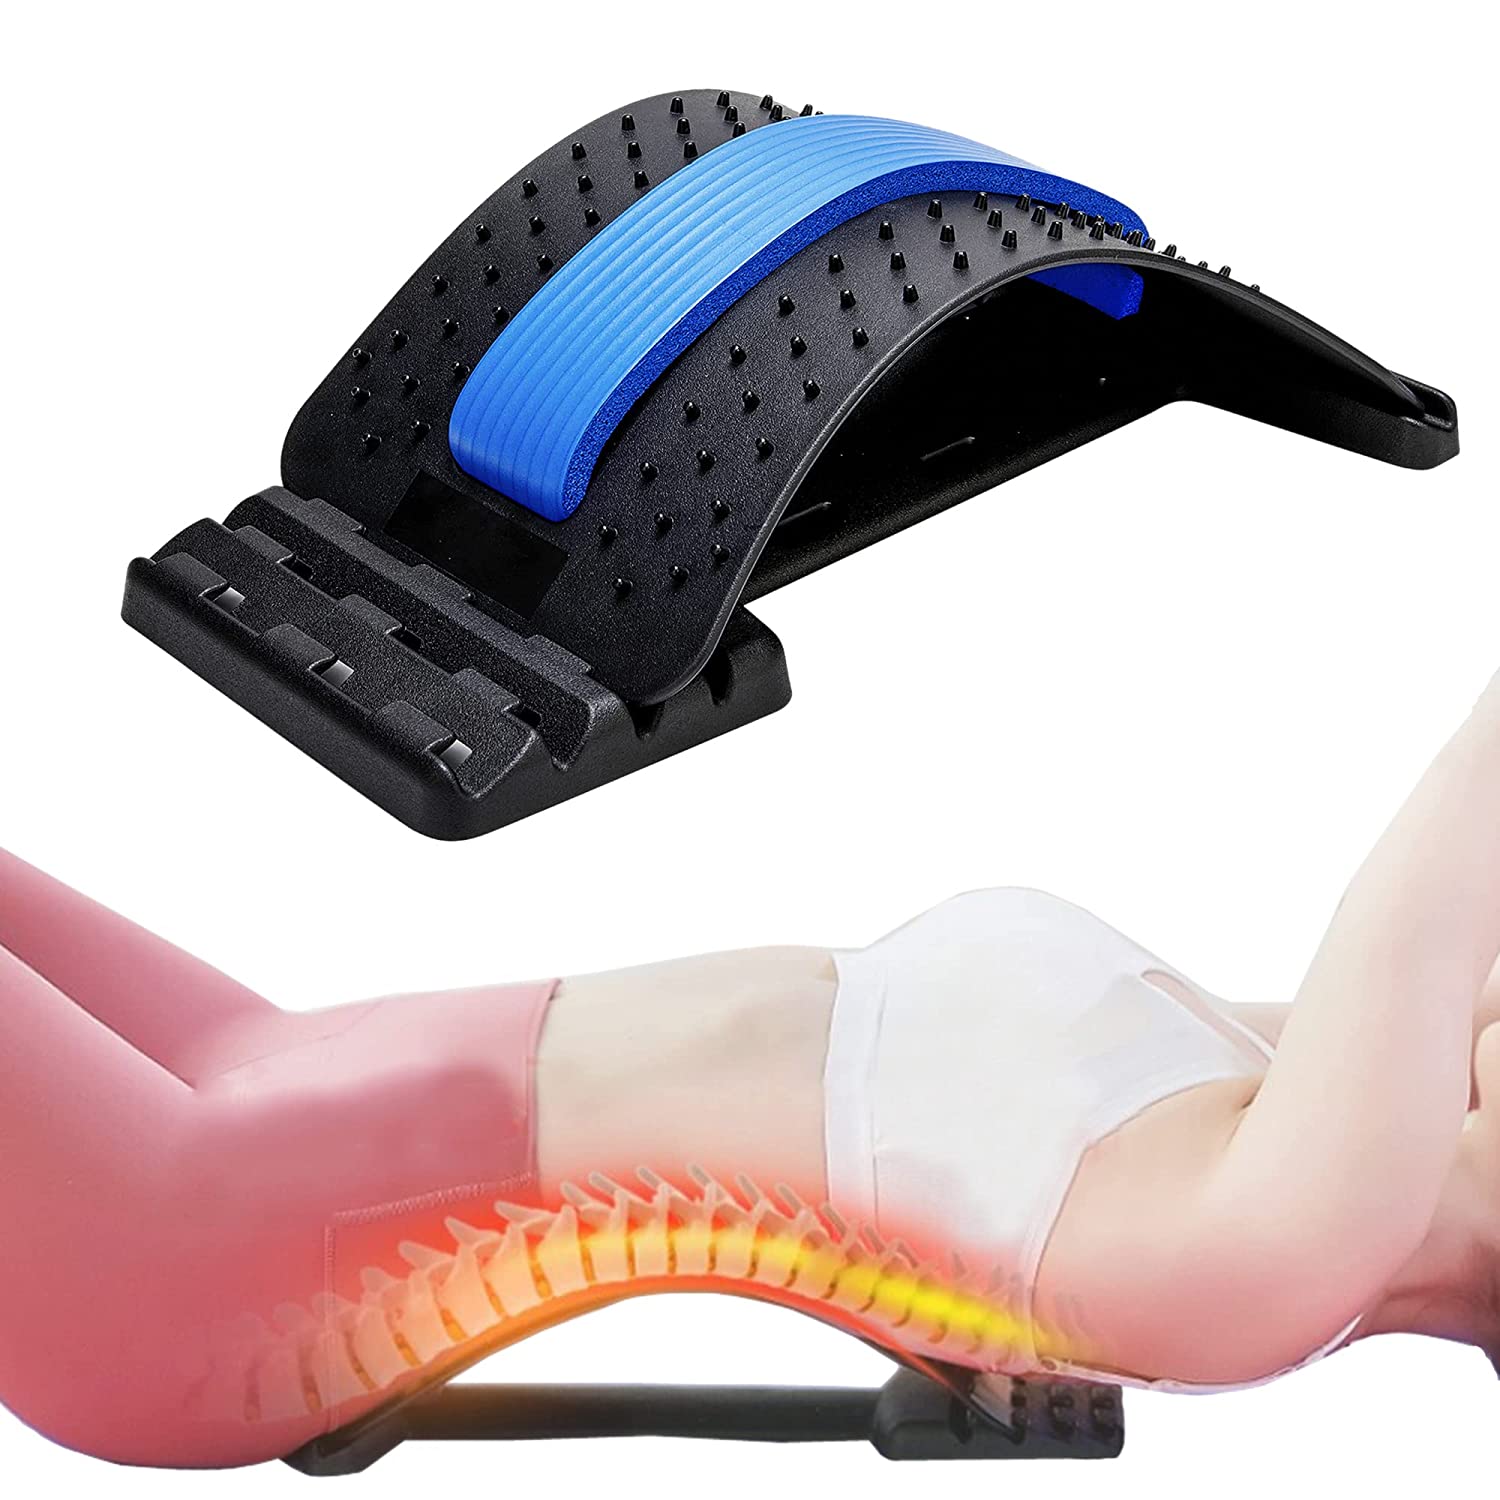 2020 best selling back pain massager